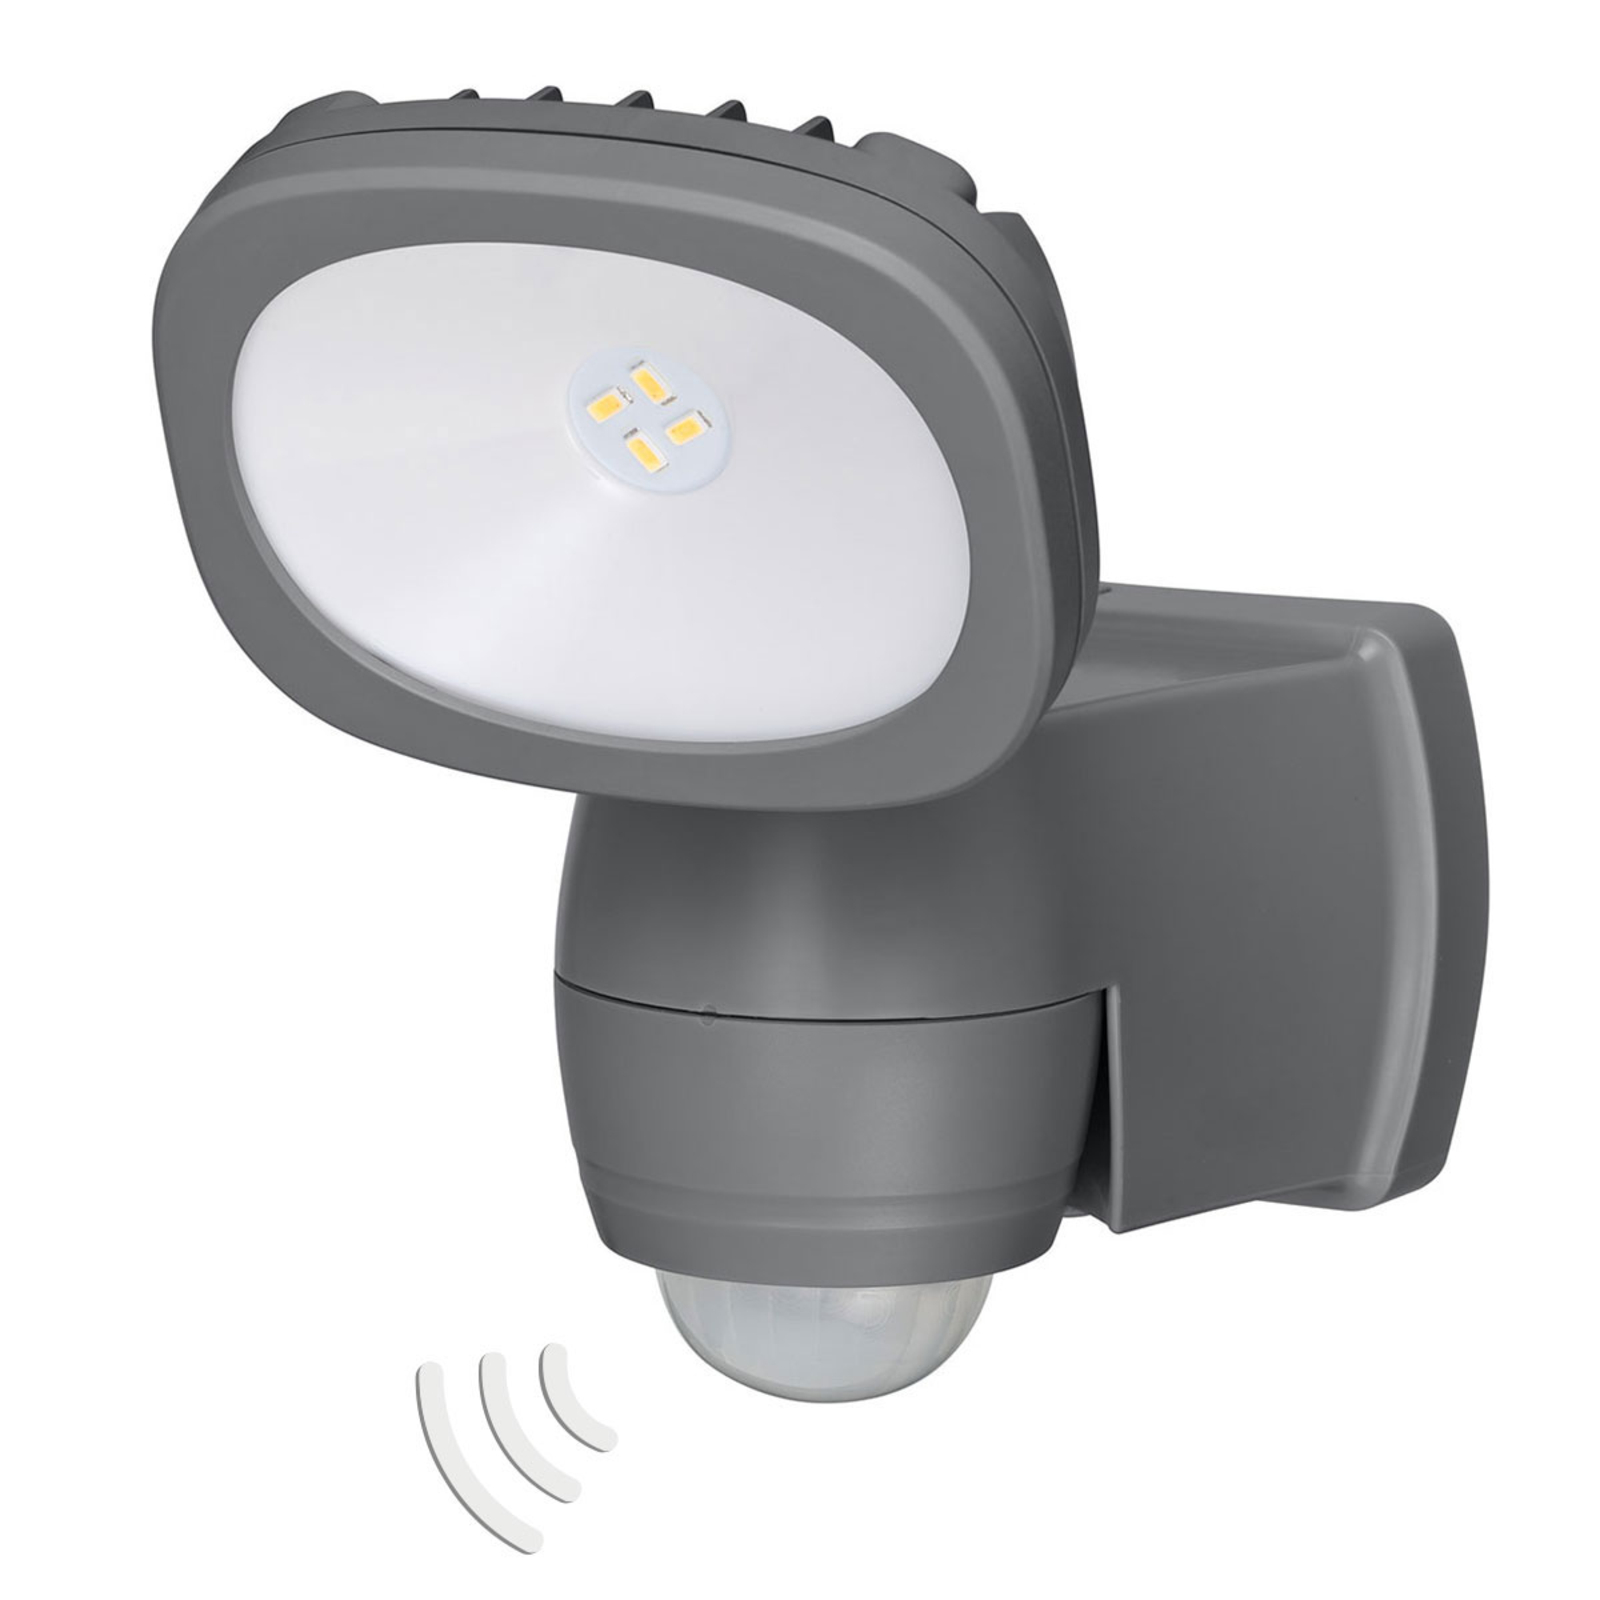 Lufos 200 spotlight with battery, IR motion sensor_1540233_1